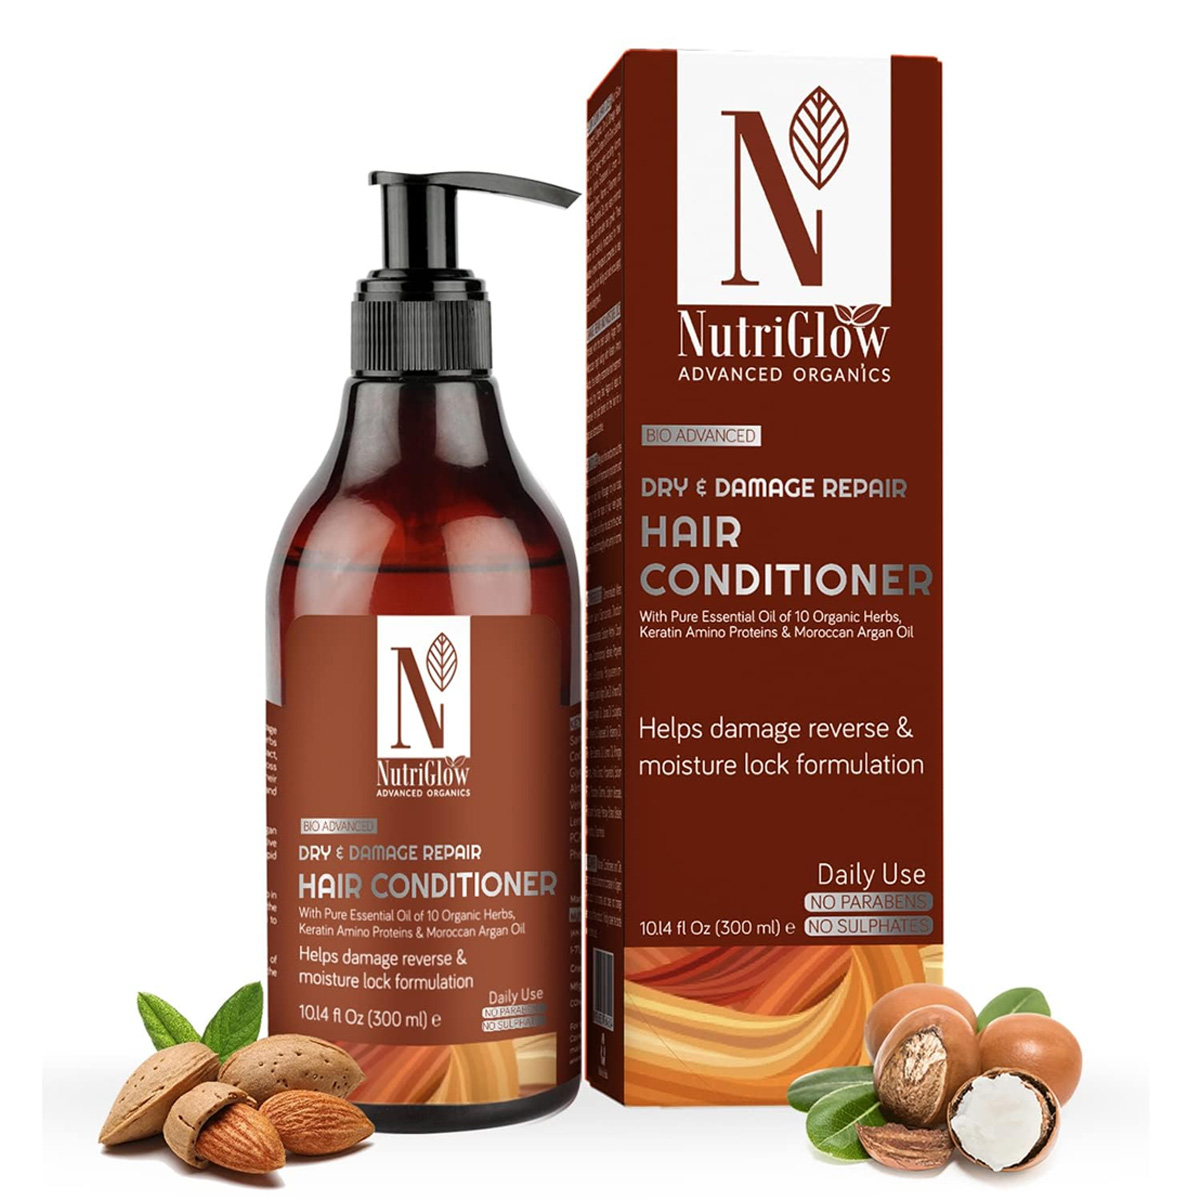 Nutriglow Advanced Organics Bio Advanced Dry And Damage Repair Hair Conditioner, 300ml